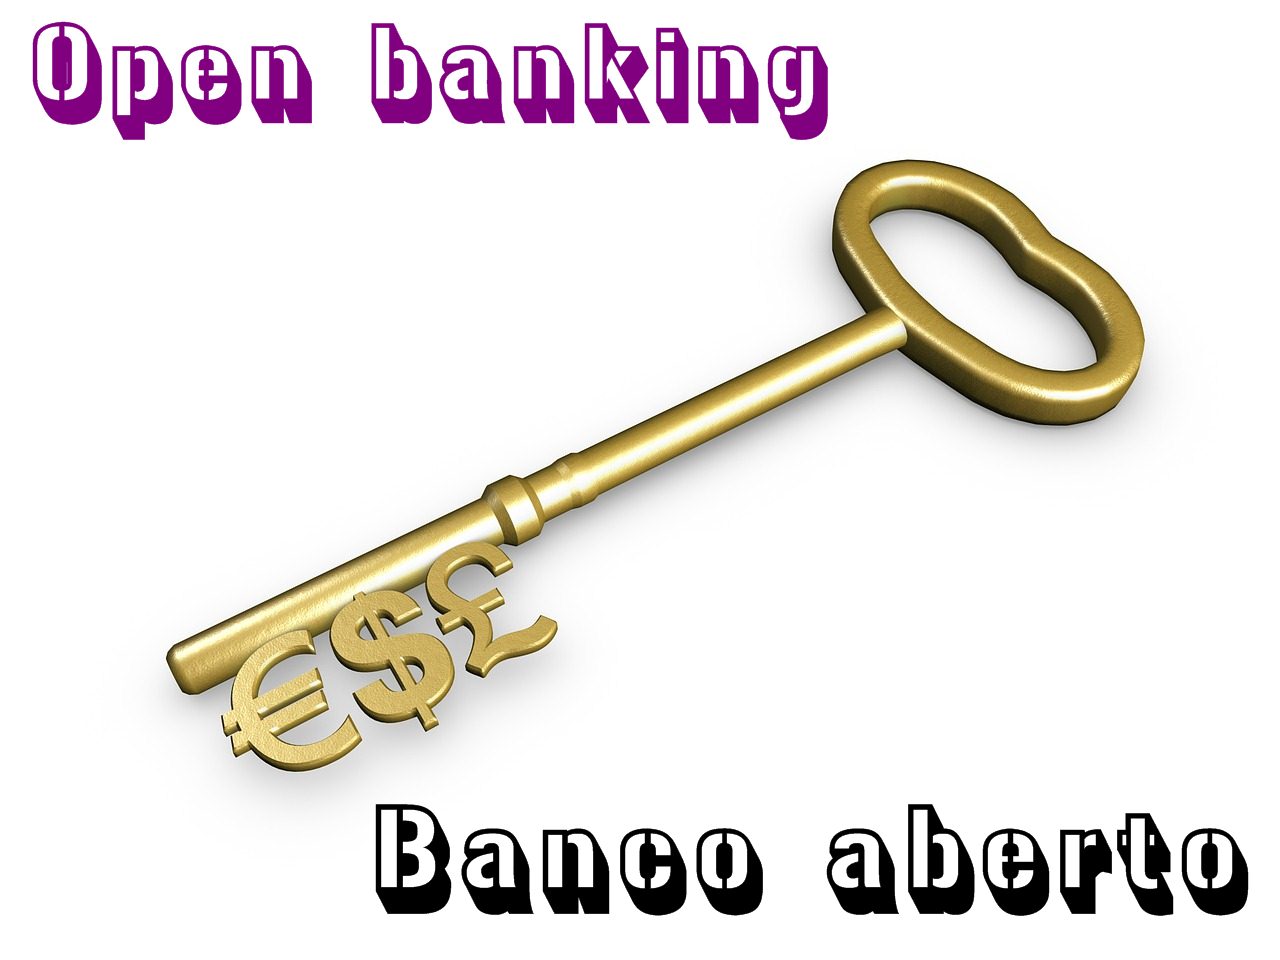 Nosso símbolo do Open Banking (Banco aberto)